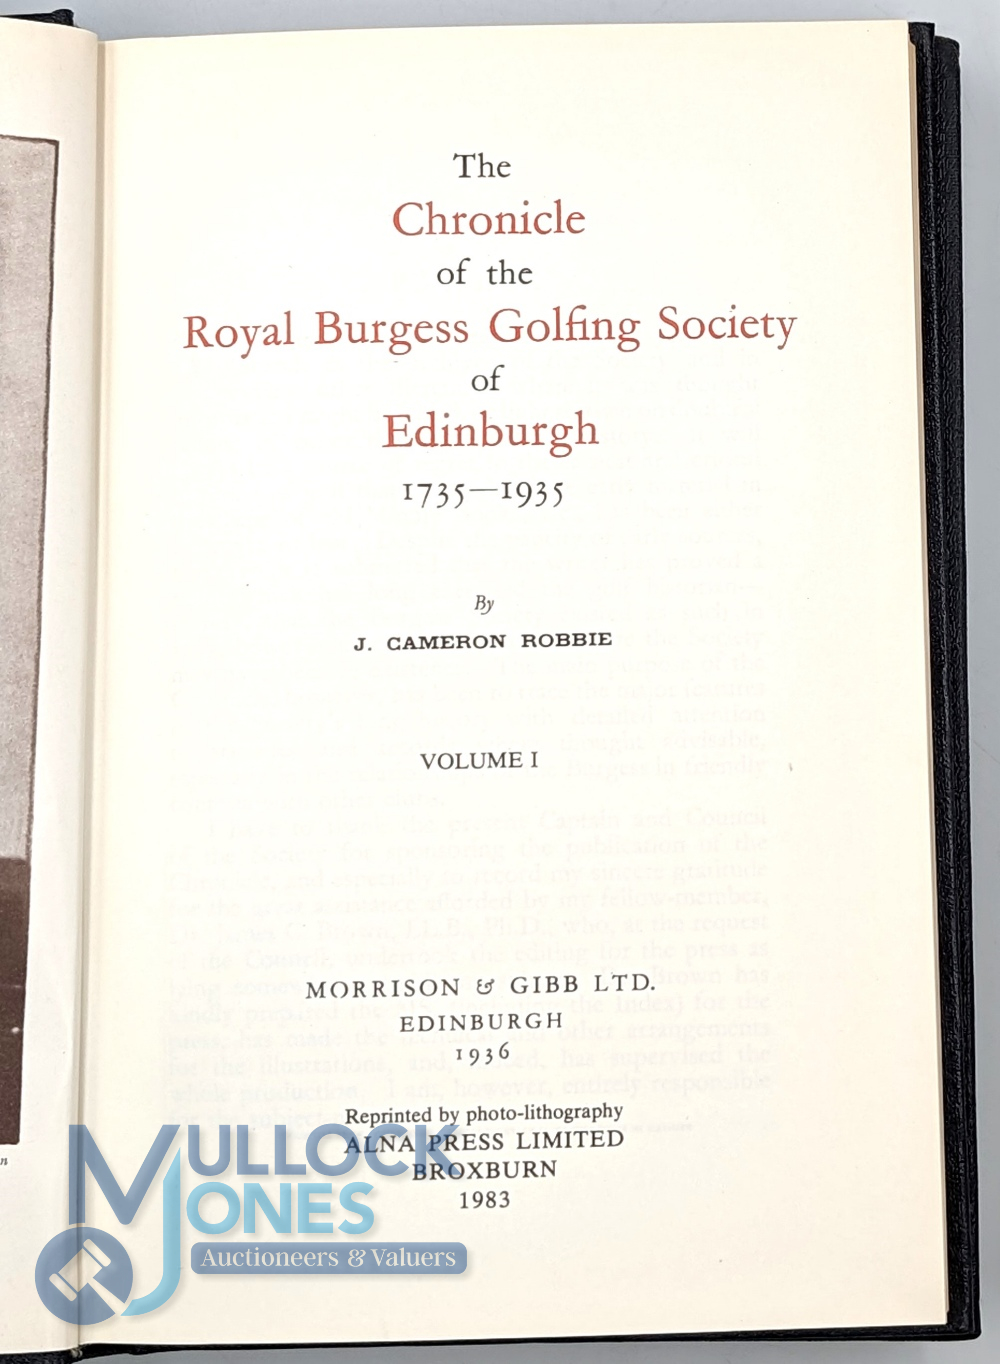 Robbie, J Cameron (2) - The Chronicle of the Royal Burgess Golfing Society of Edinburgh 1735-1915 - Image 2 of 2